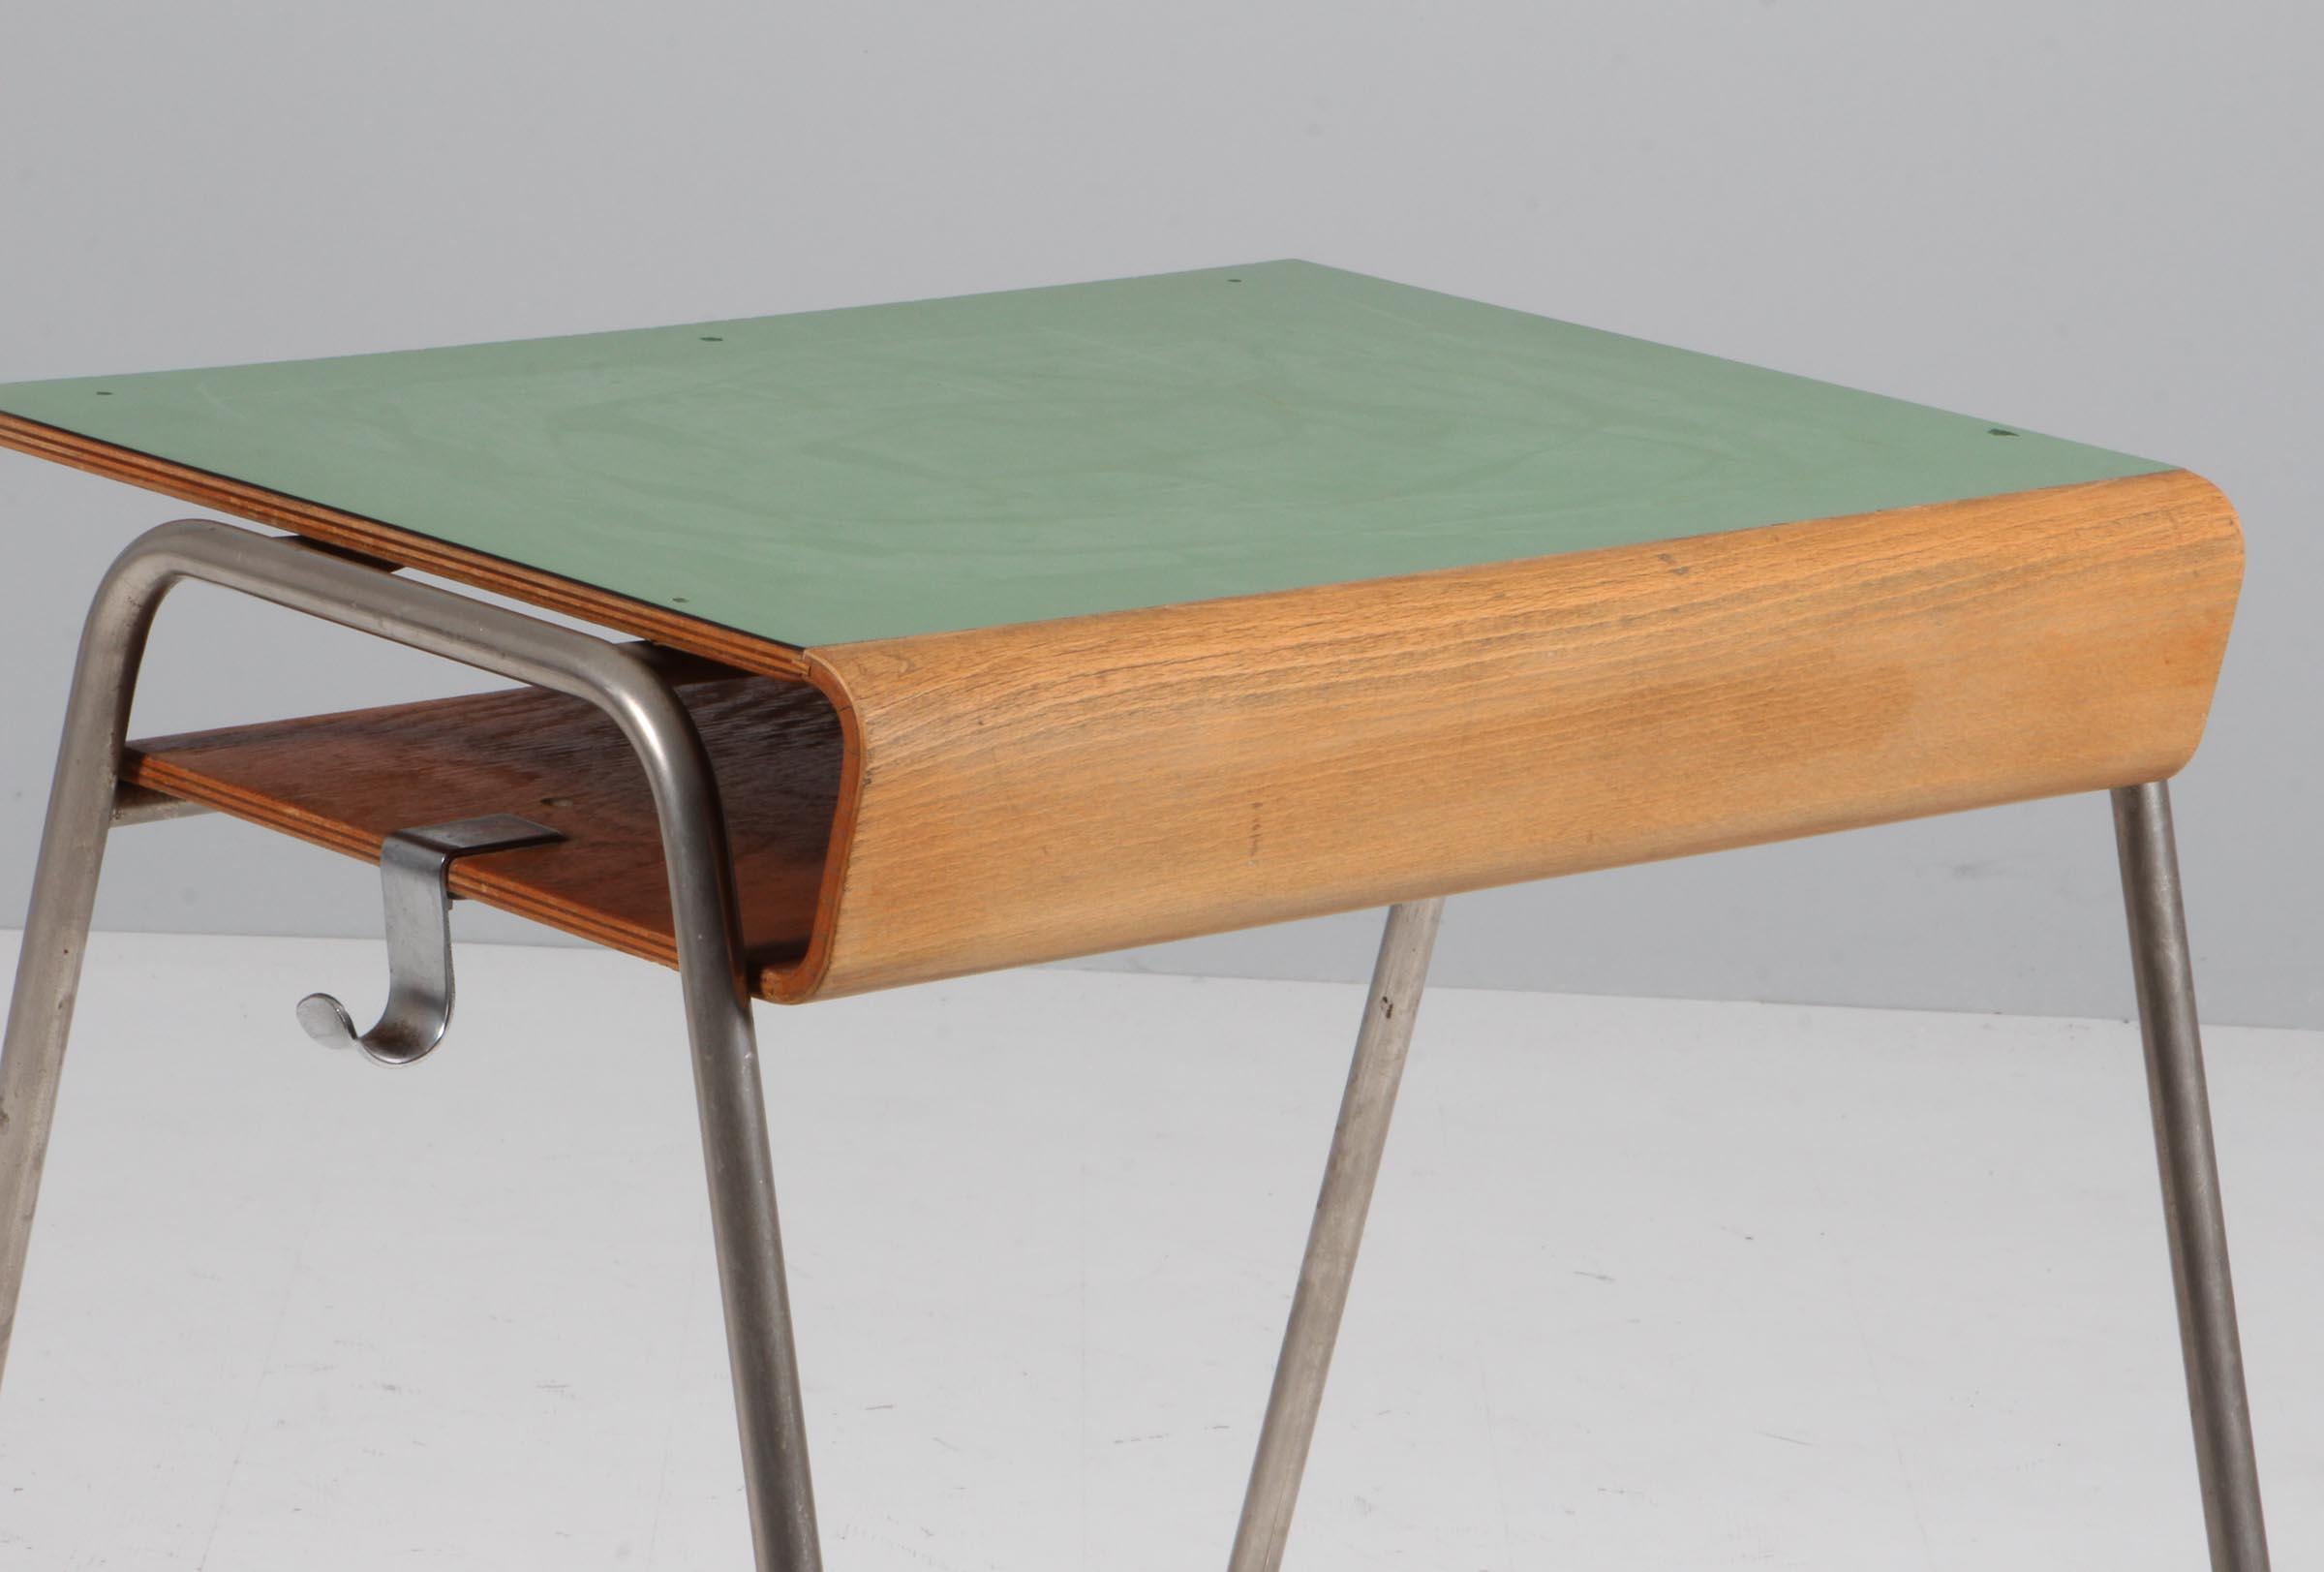 Steel Arne Jacobsen School table for Munkegaards skolen. Laminate and beech